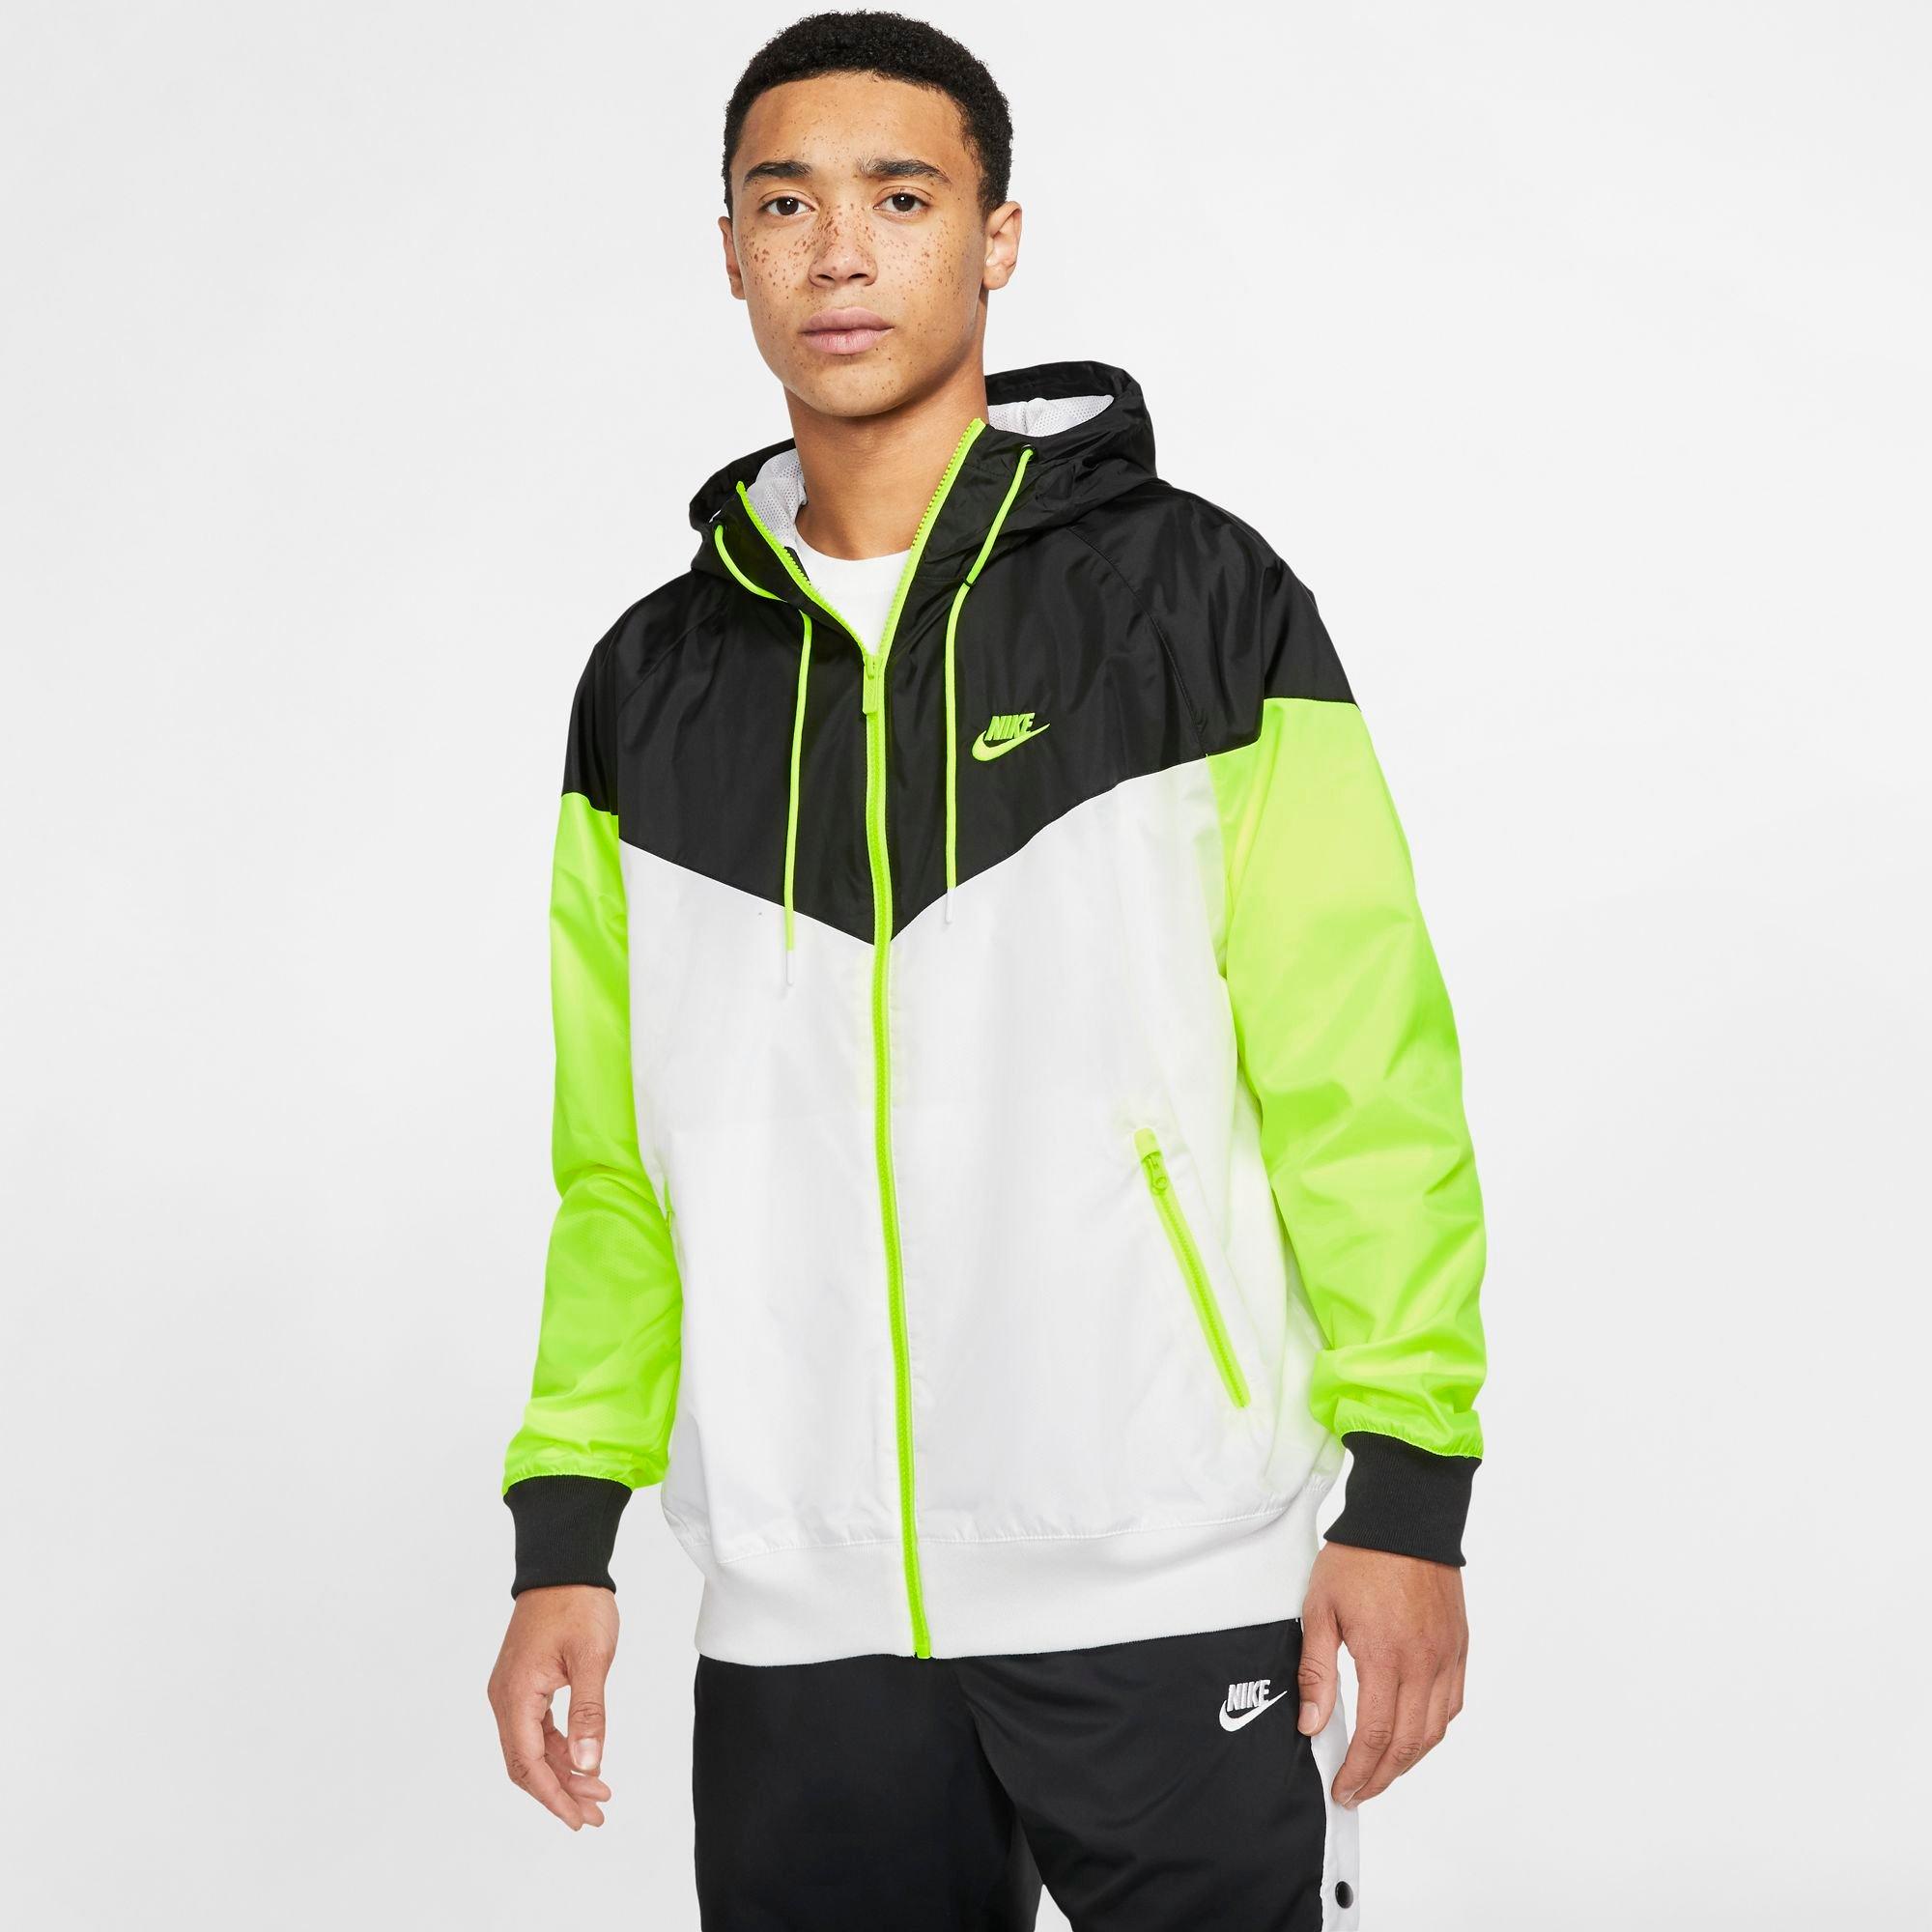 hibbett sports adidas jackets